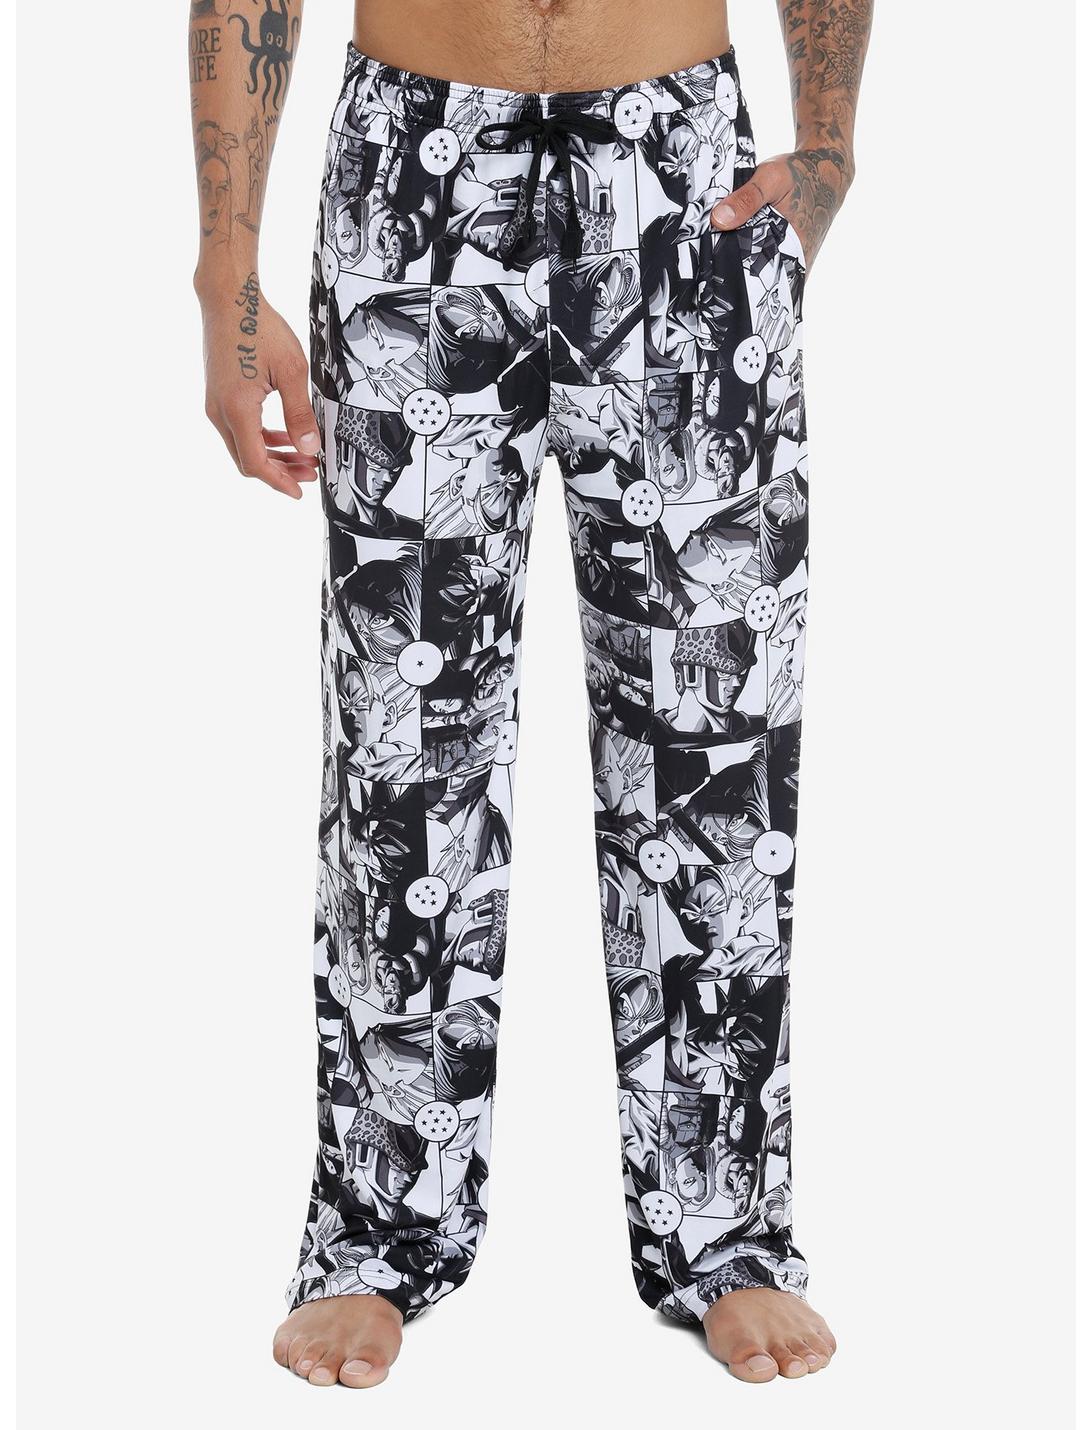 Dragon Ball Z Black & White Panel Pajama Pants, BLACK, hi-res